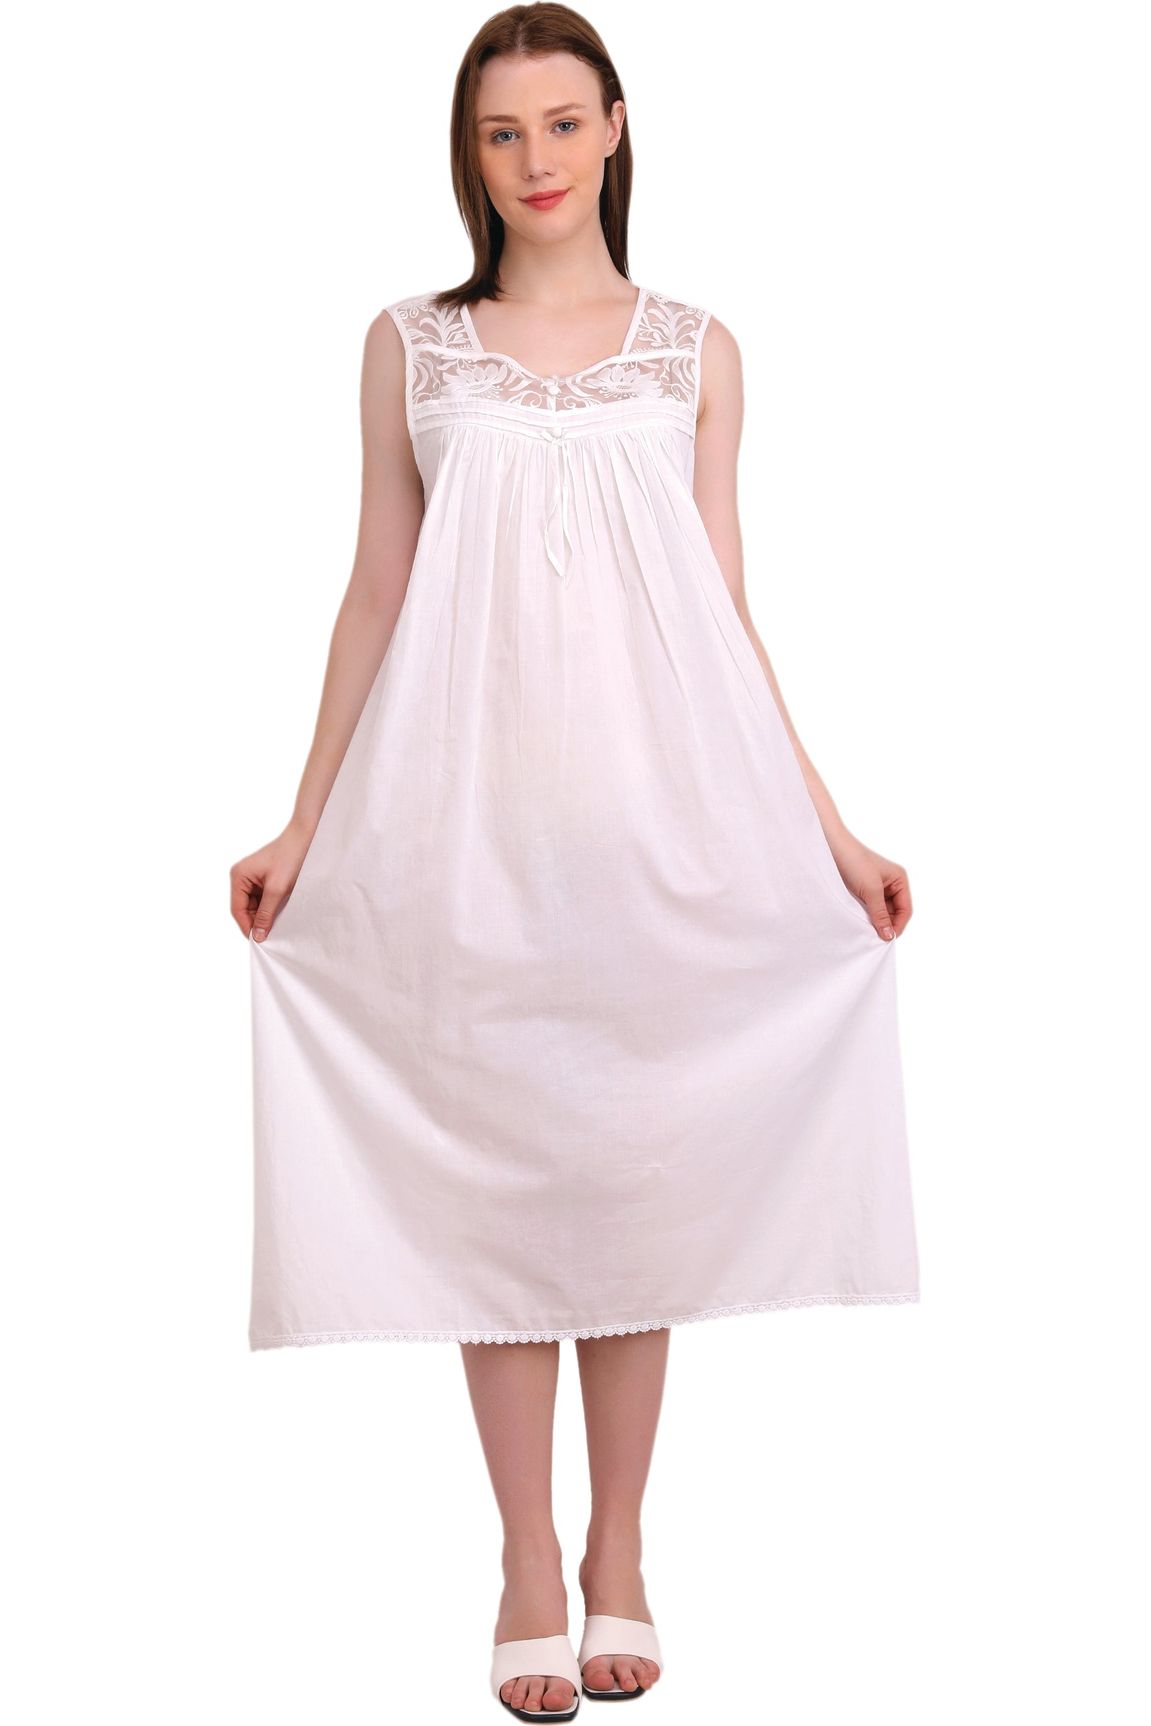 Papa 100% Cotton Long Sleeveless Nightgown - Style PJ4483, front